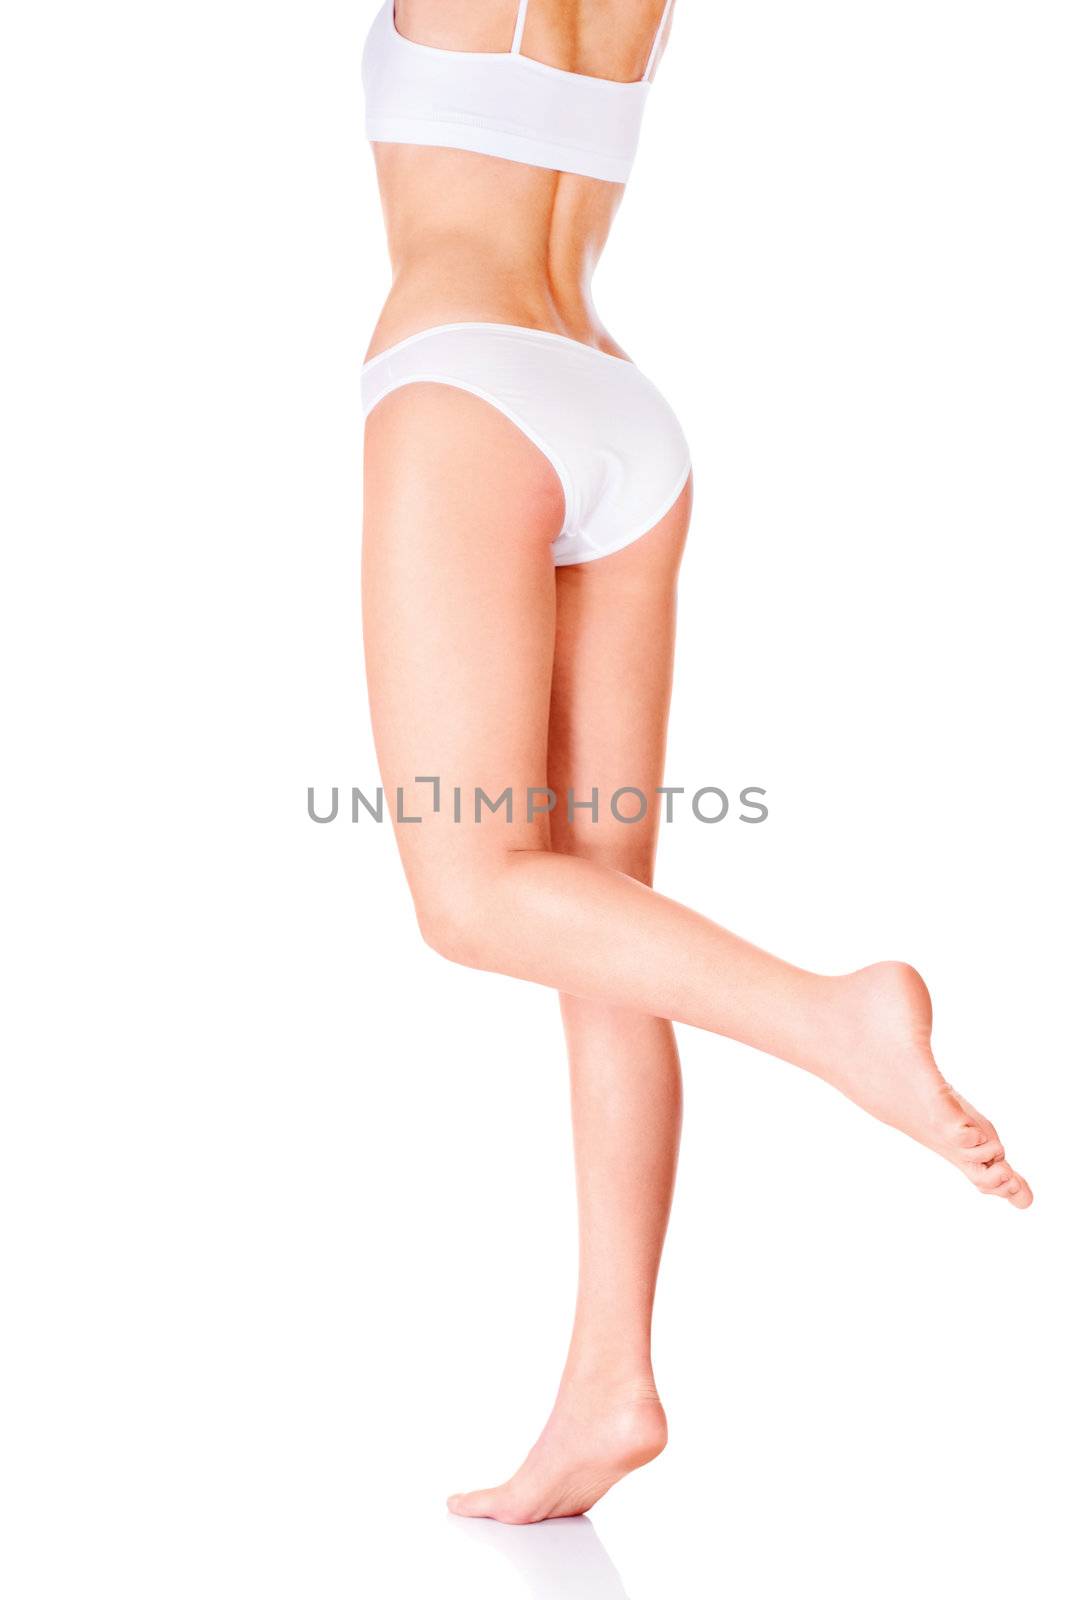 female body in underwear by imarin